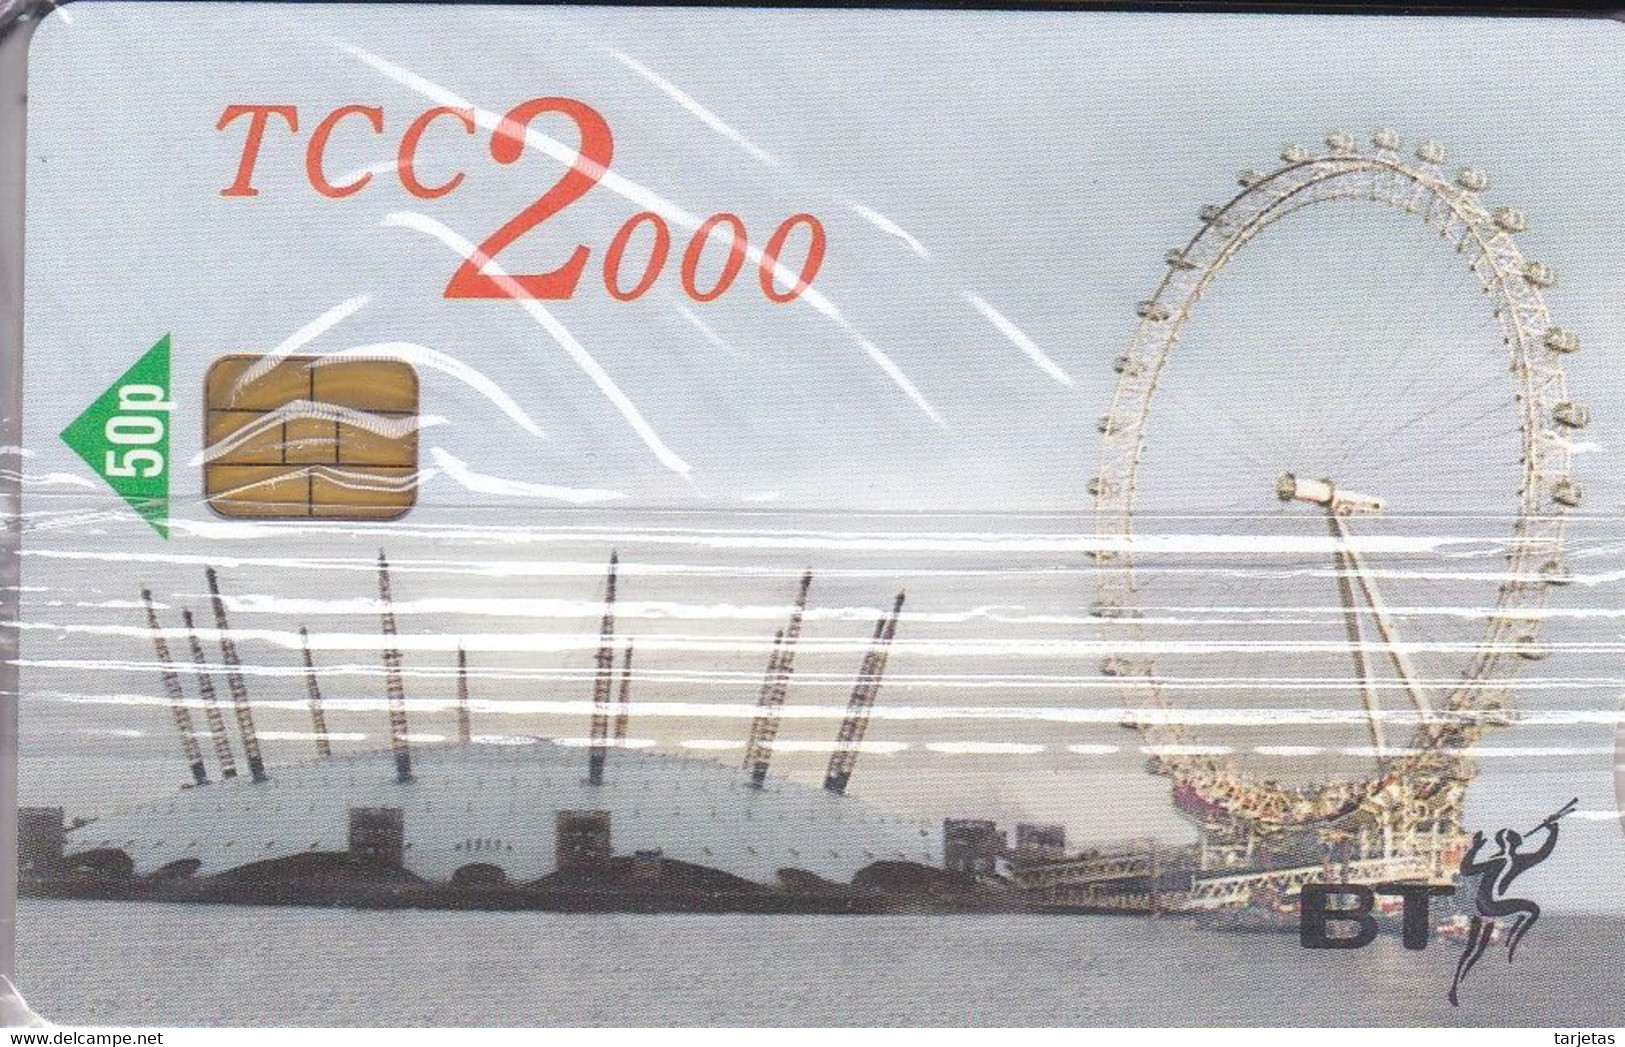 TARJETA DEL REINO UNIDO DE BT TCC 2000 (NUEVA-MINT) NORIA DE LONDRES - BT Werbezwecke